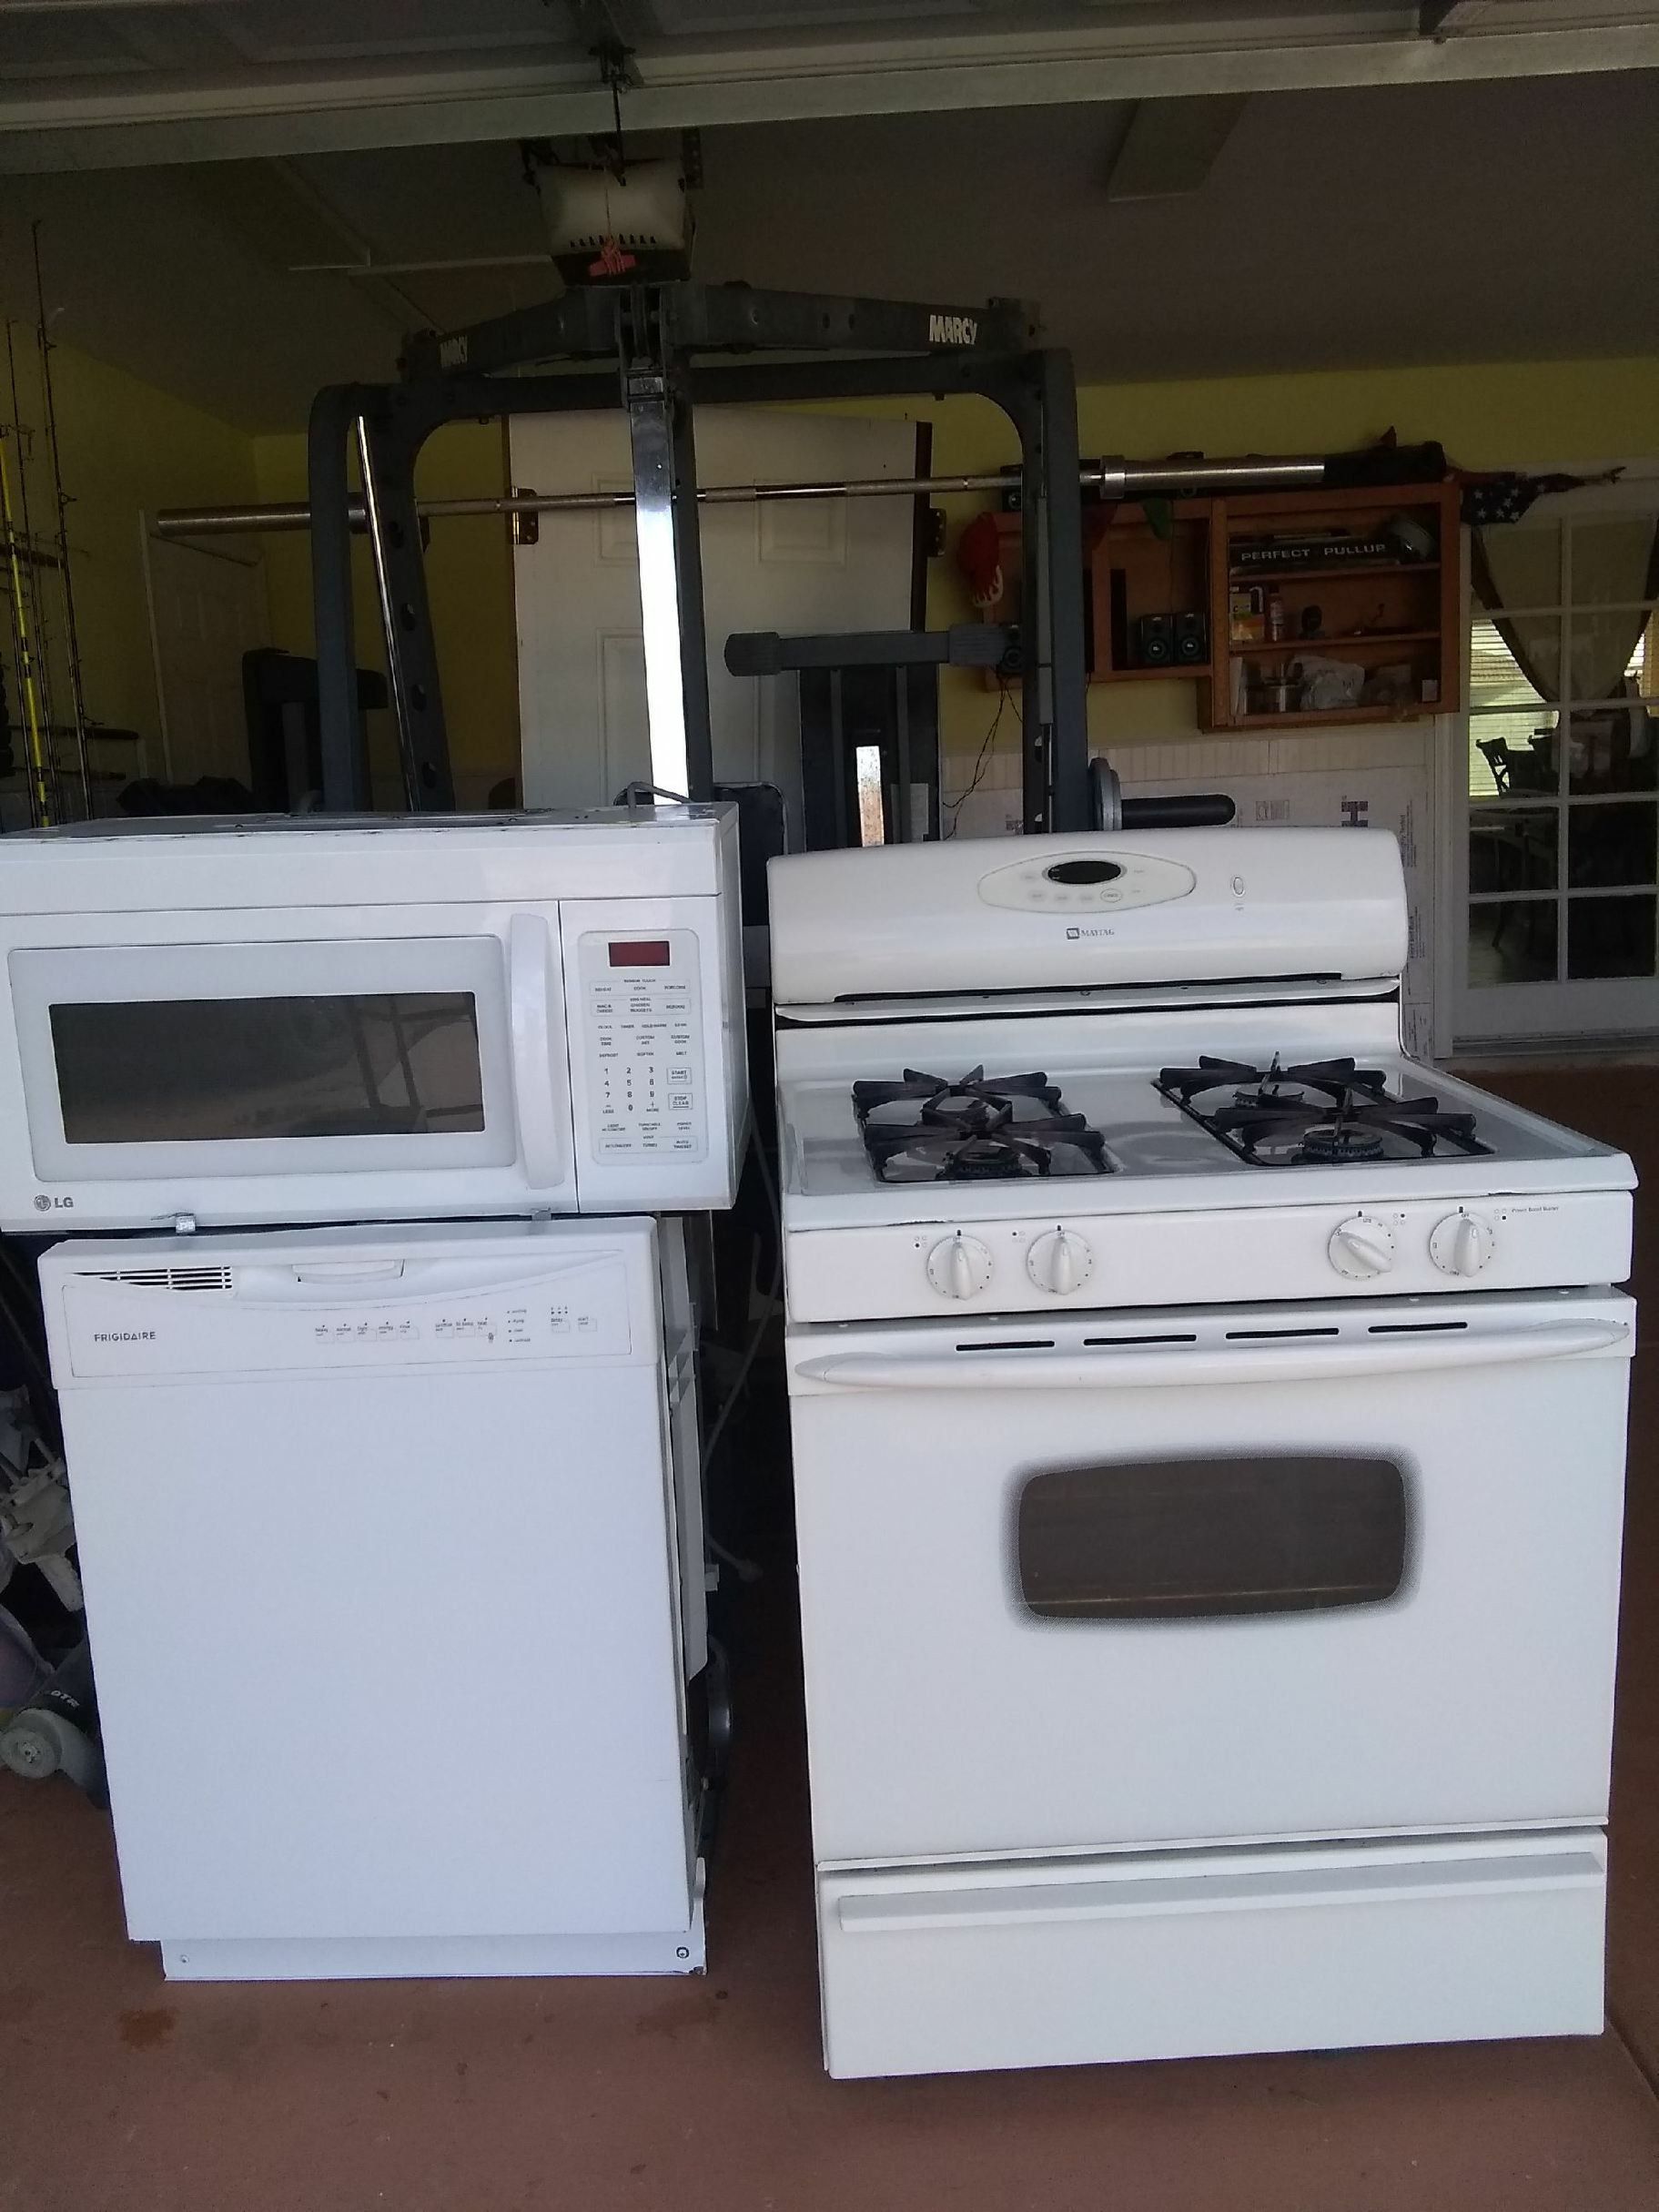 Gas stove, Overhead Microwave&Dishwasher